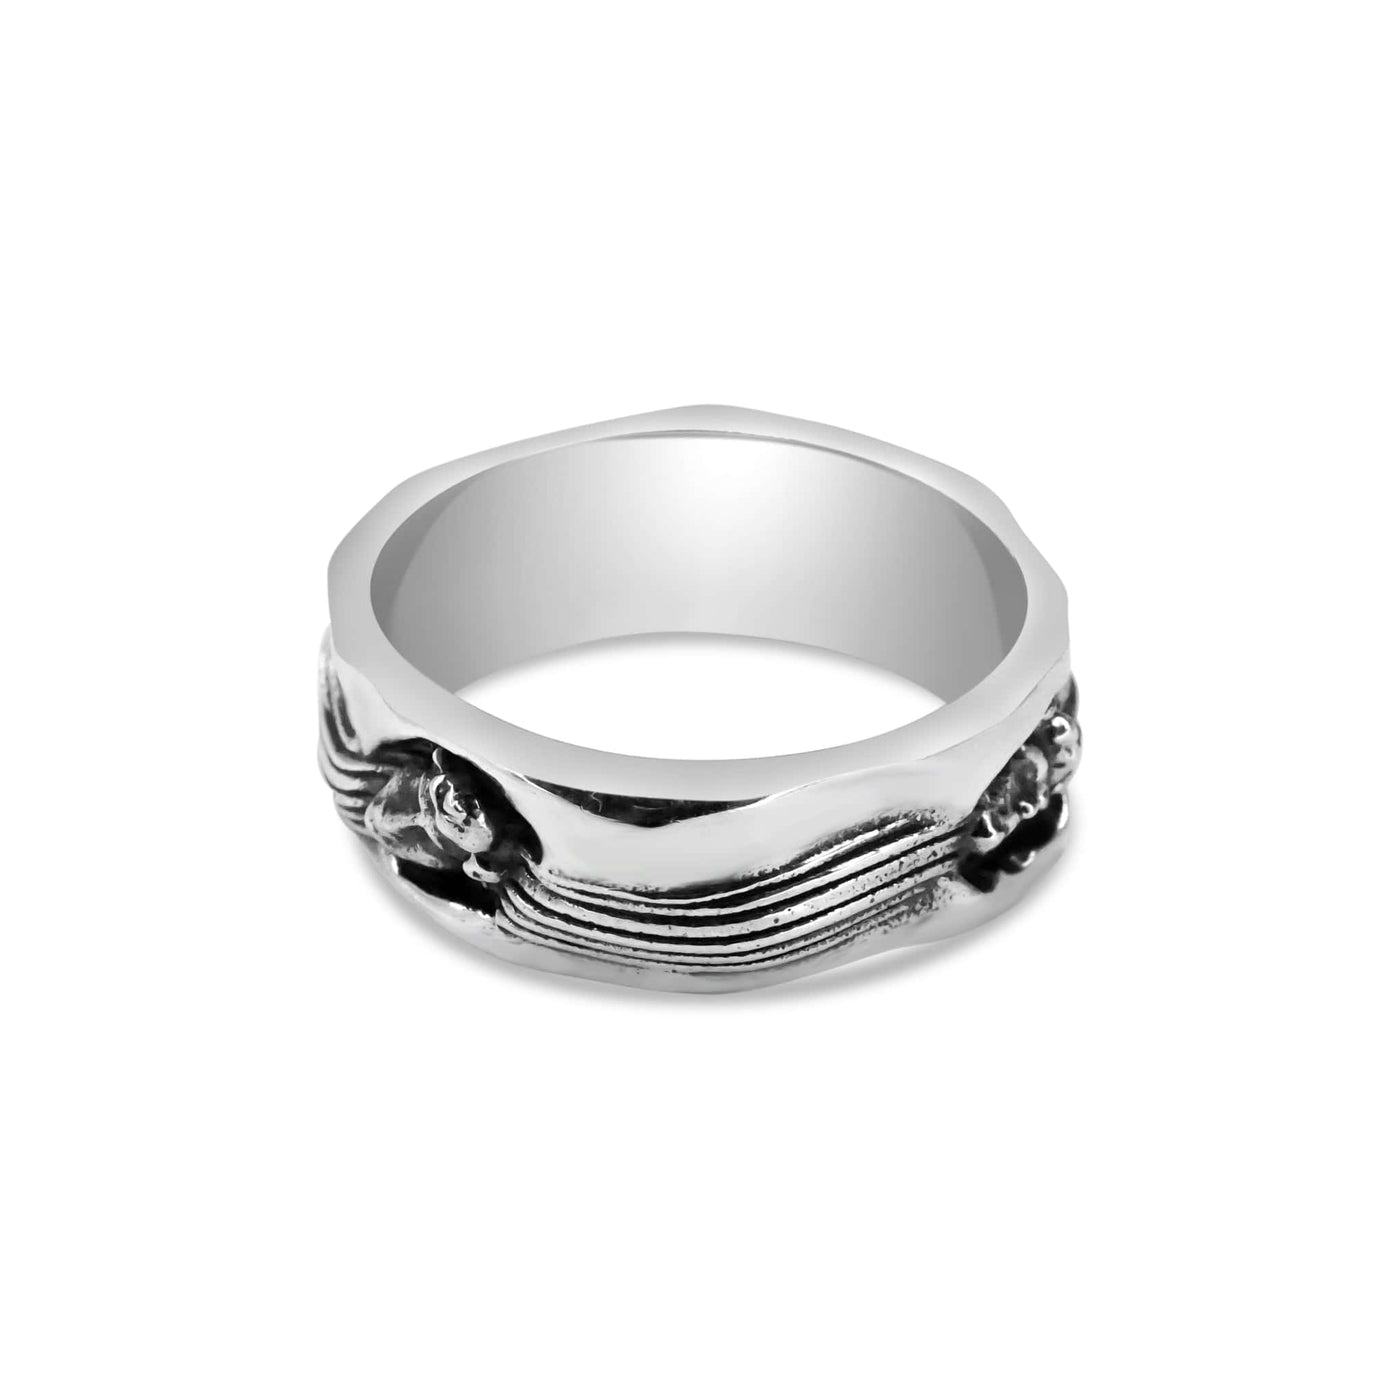 Onda - Girati Silver Rings for Men